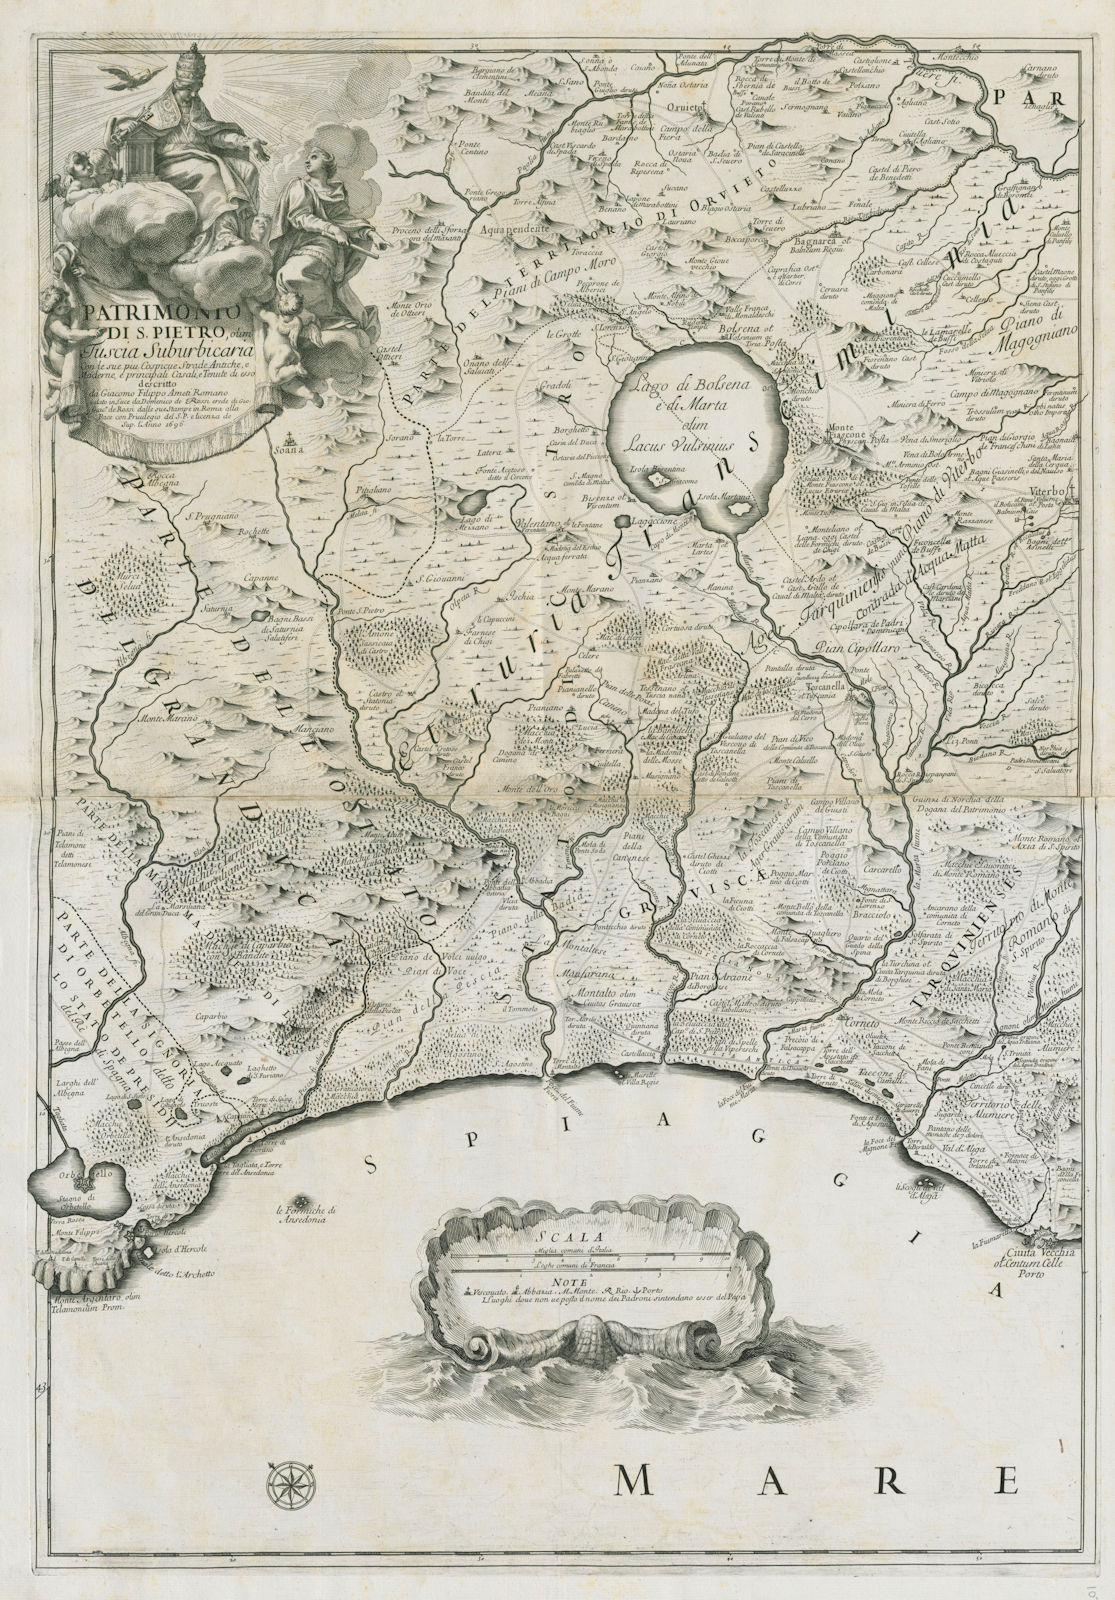 Associate Product Patrimonio di S.Pietro, olim Tuscia Suburbicaria. Tuscany/Lazio. ROSSI 1696 map